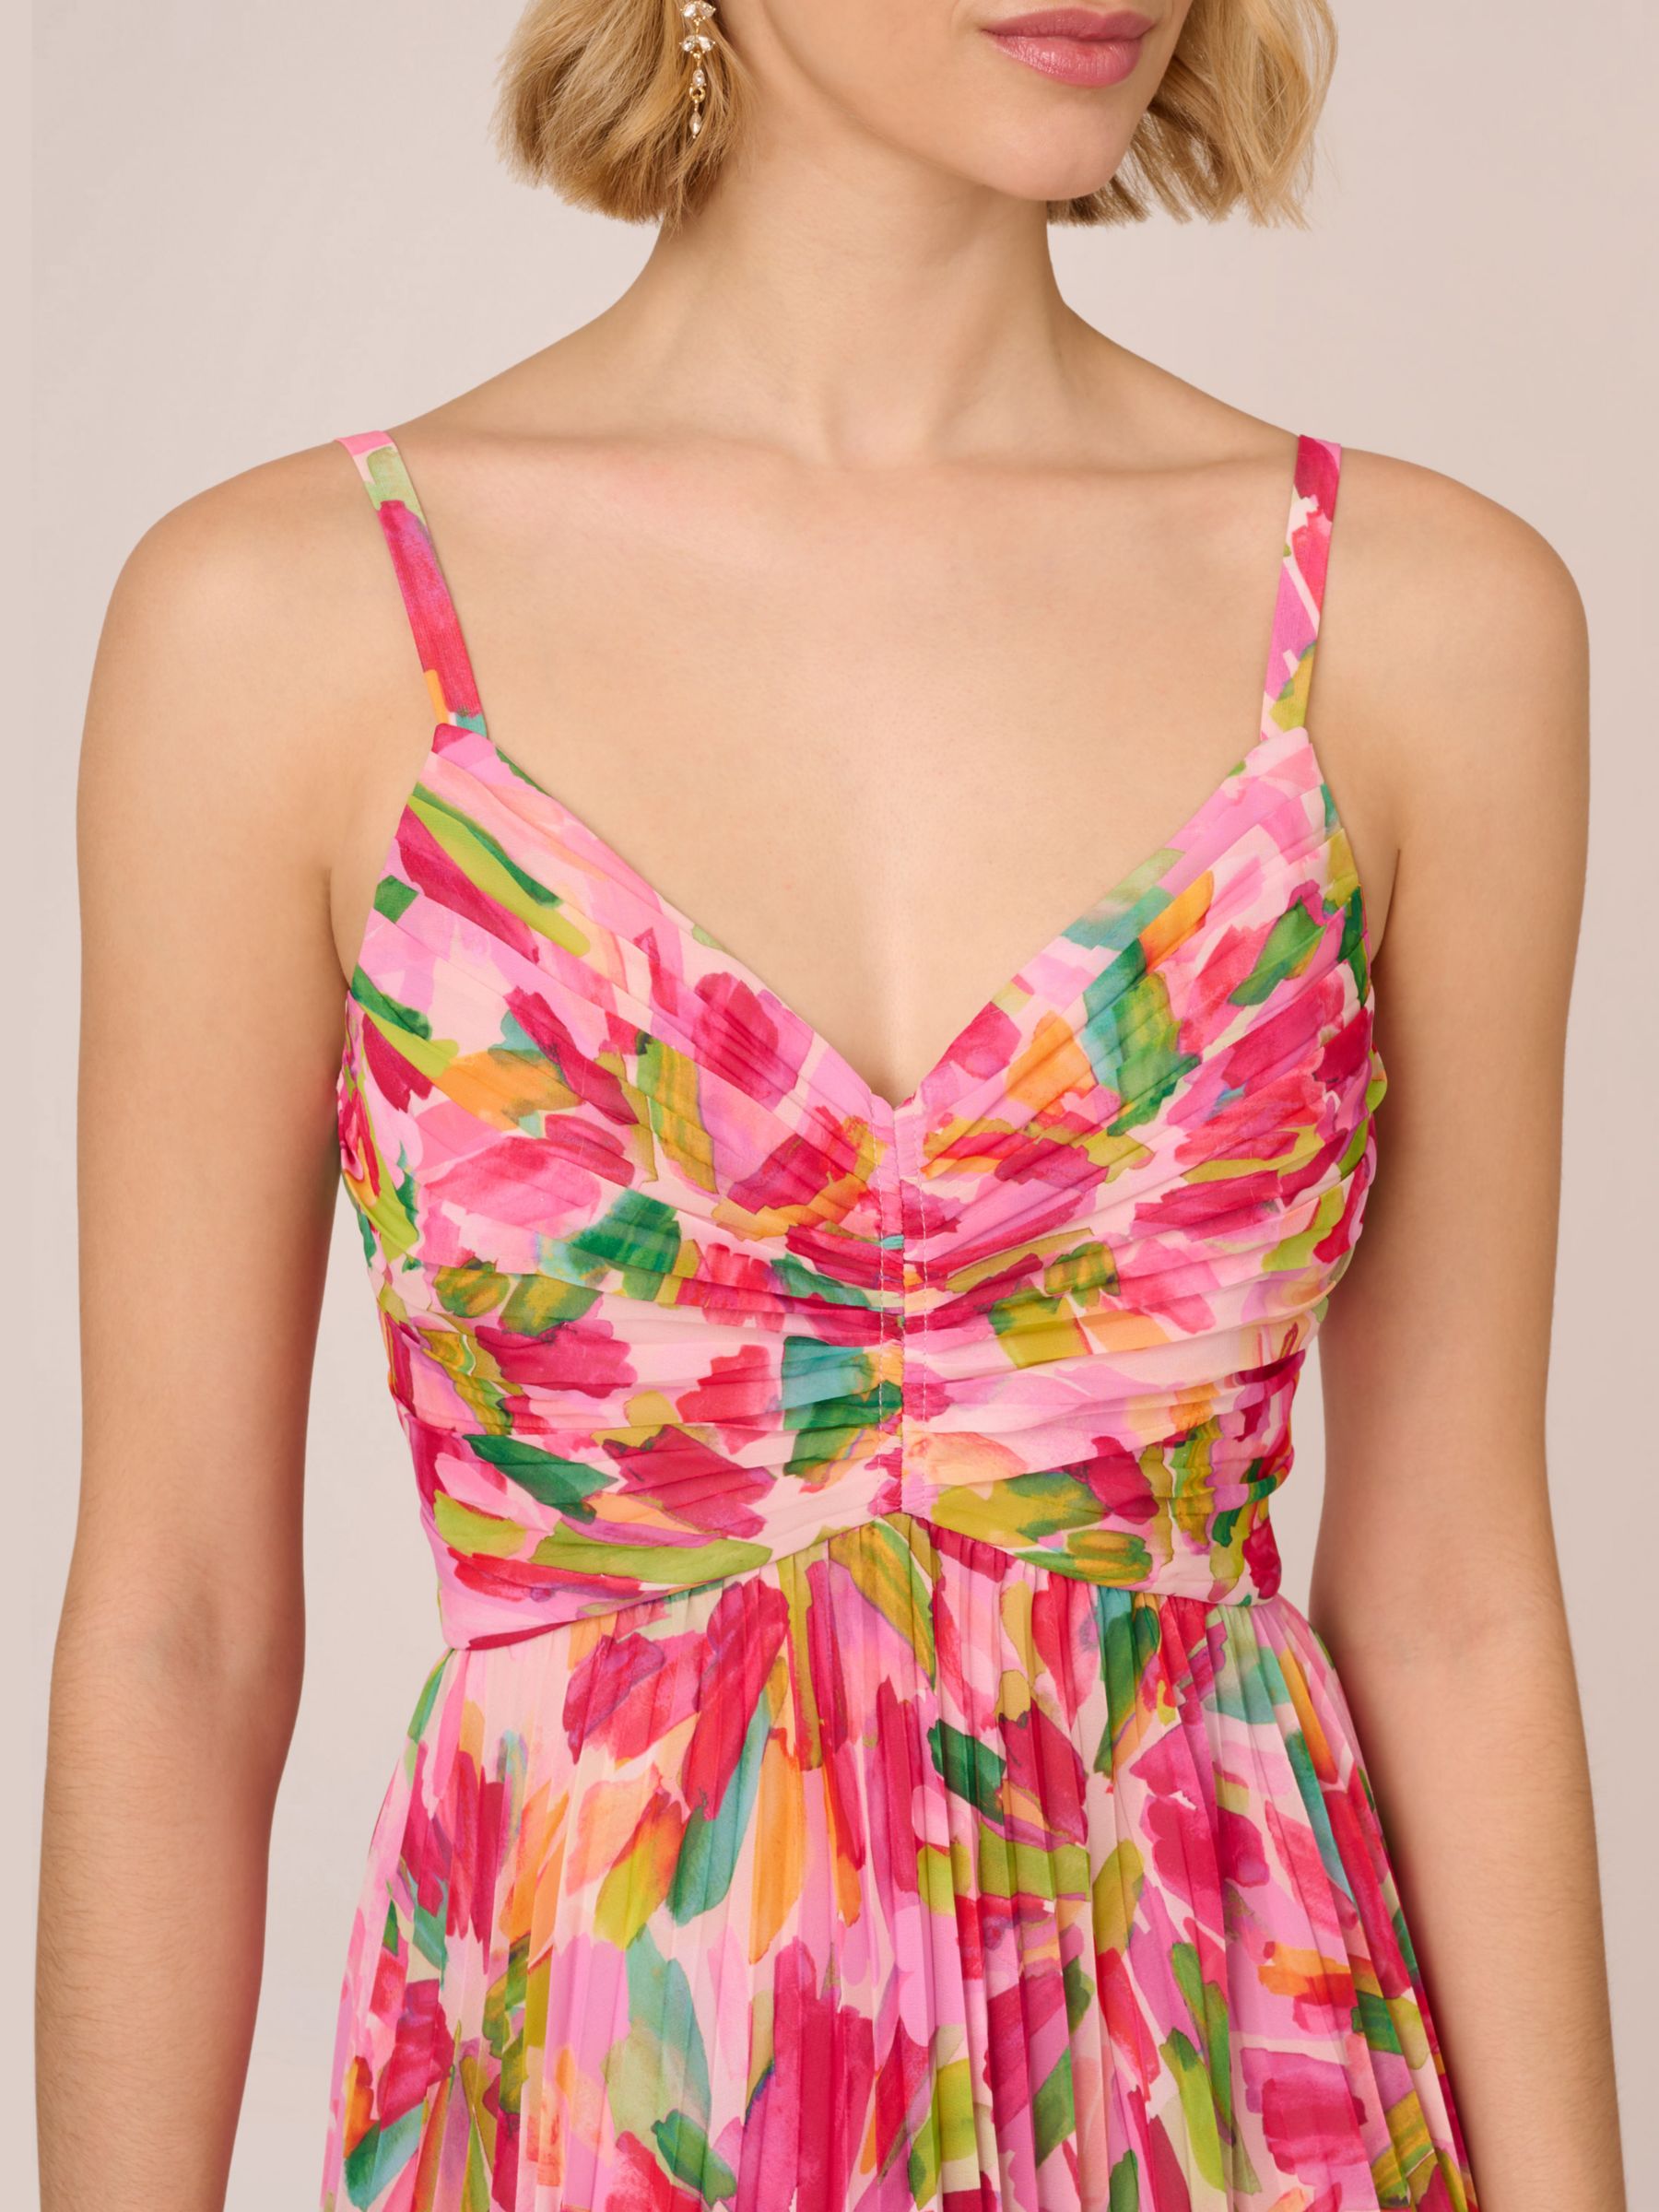 Adrianna Papell Pleated Midi Dress, Pink/Green Multi, 6